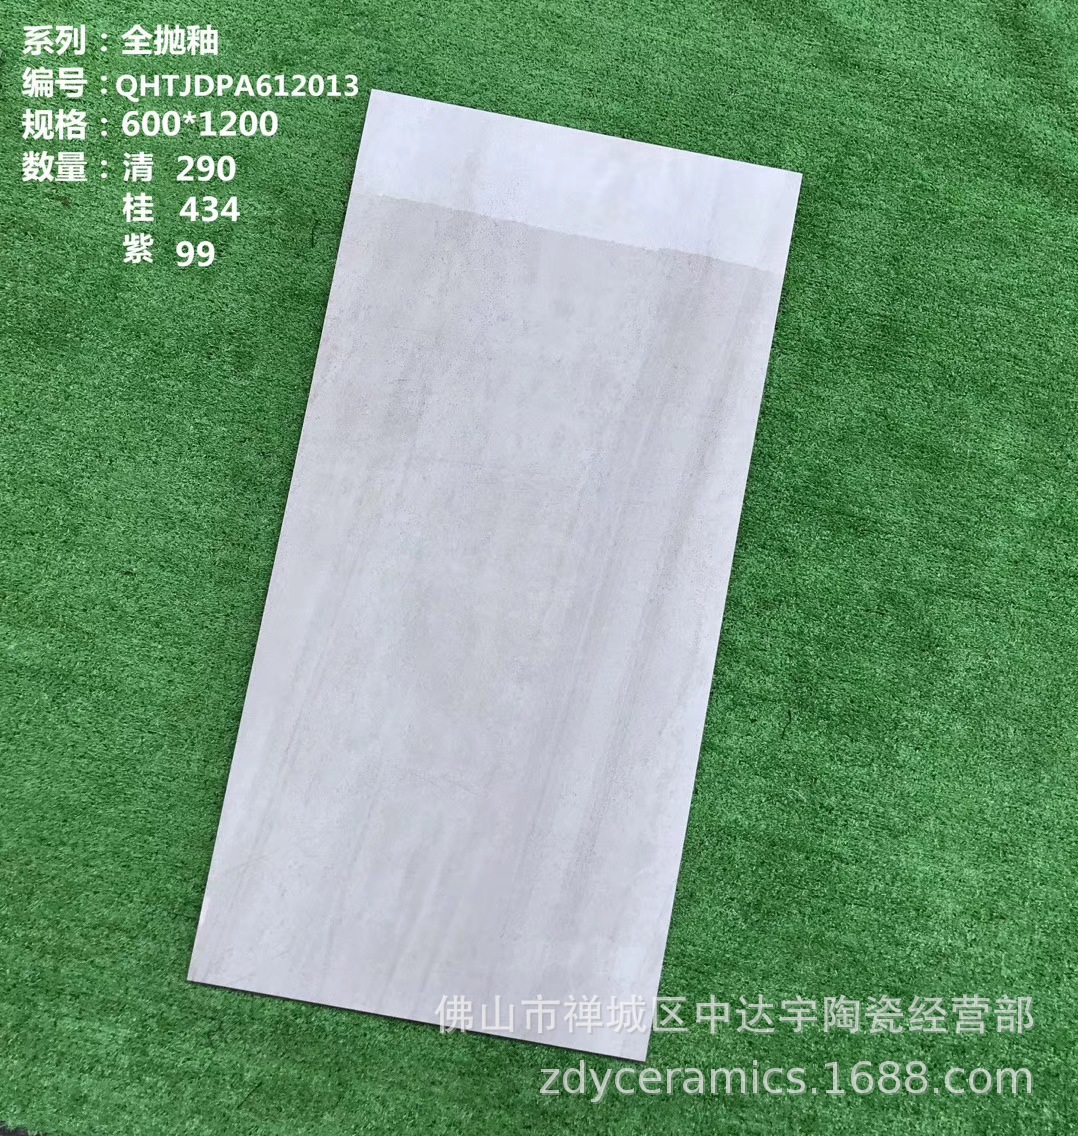 FS全抛釉大理石瓷砖600X1200MM QHTBDPA612033-B客厅卫生间地板砖示例图7